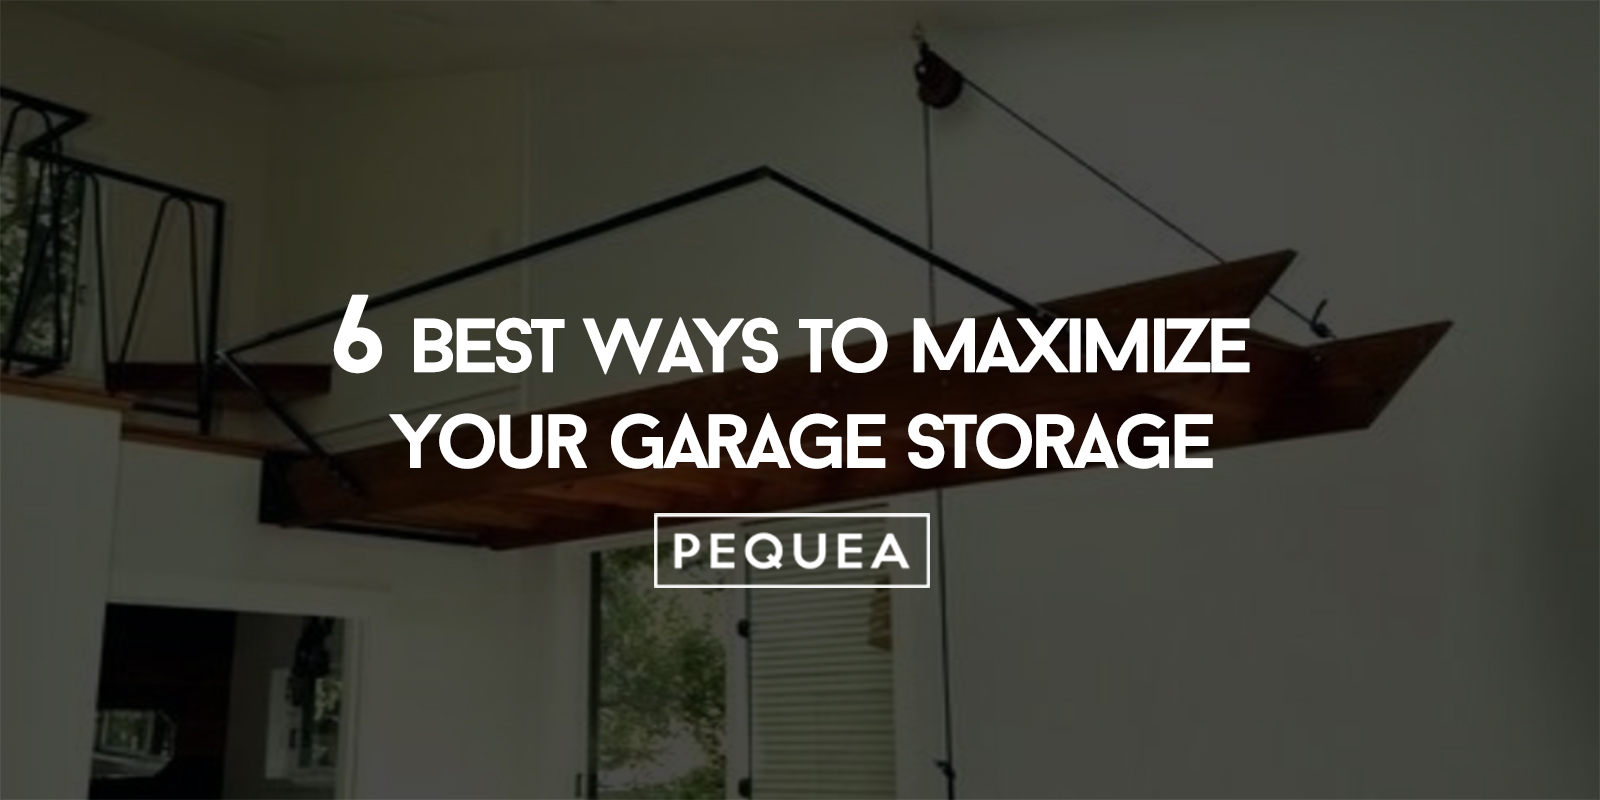 6 Best Ways to Maximize Your Garage Storage